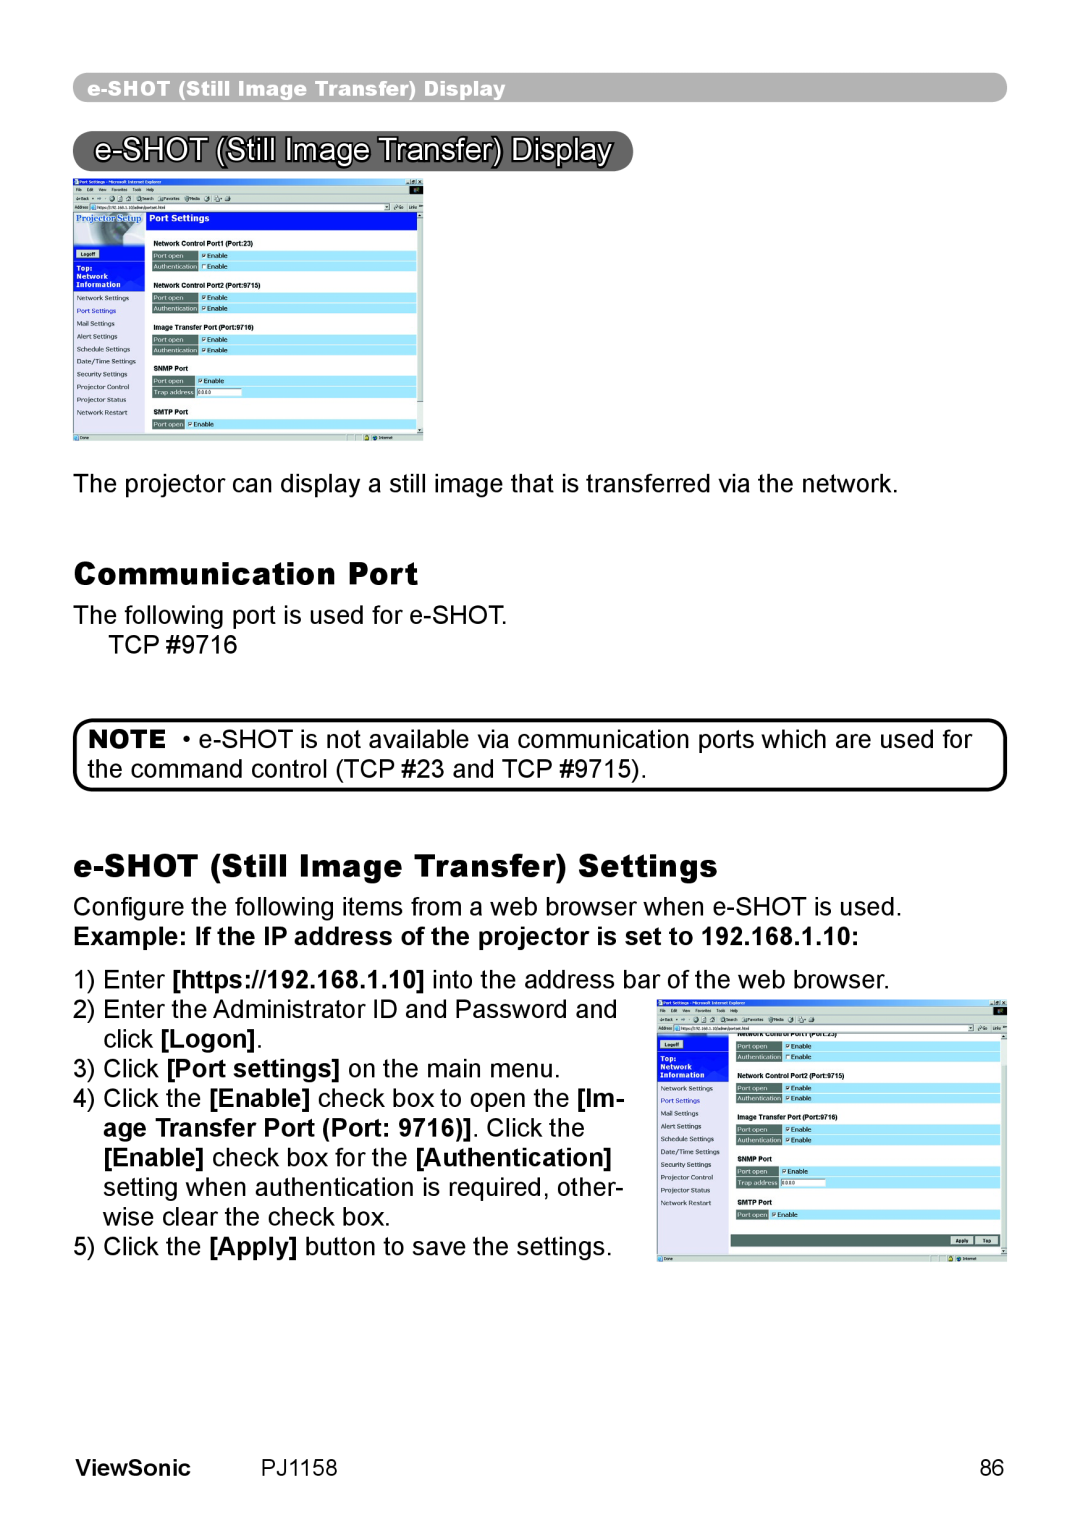 ViewSonic PJ1158 manual e-SHOTStillImageTransfer Display, Communication Port, e-SHOTStill Image Transfer Settings 